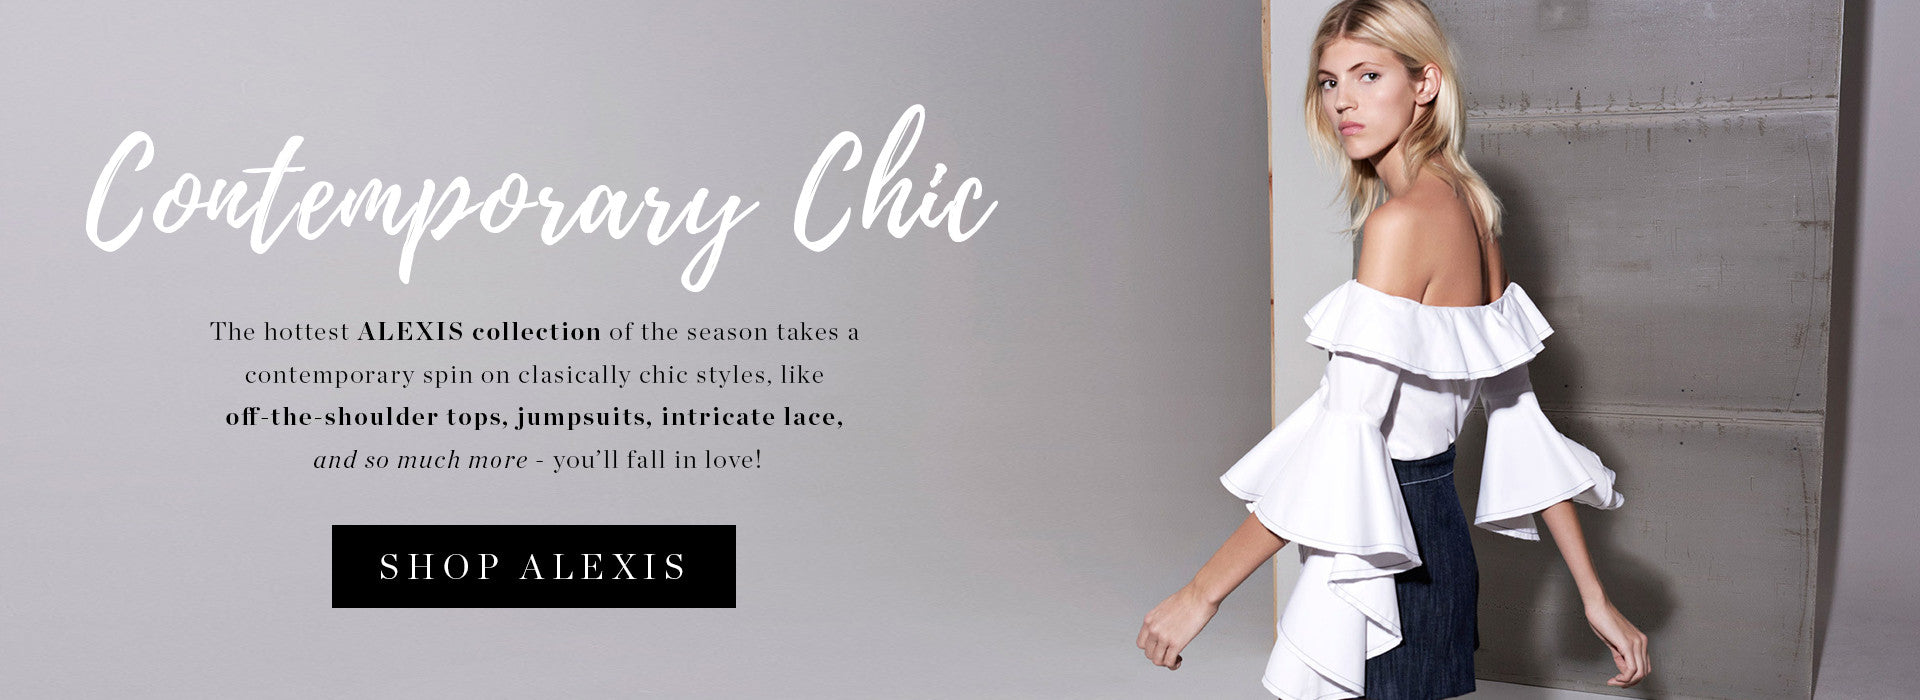 Alexis Clothing Sale, Alexis Clothing, Alexis Dresses on Sale, Alexis Rompers, Alexis Jumpsuits, Alexis New Arrivals